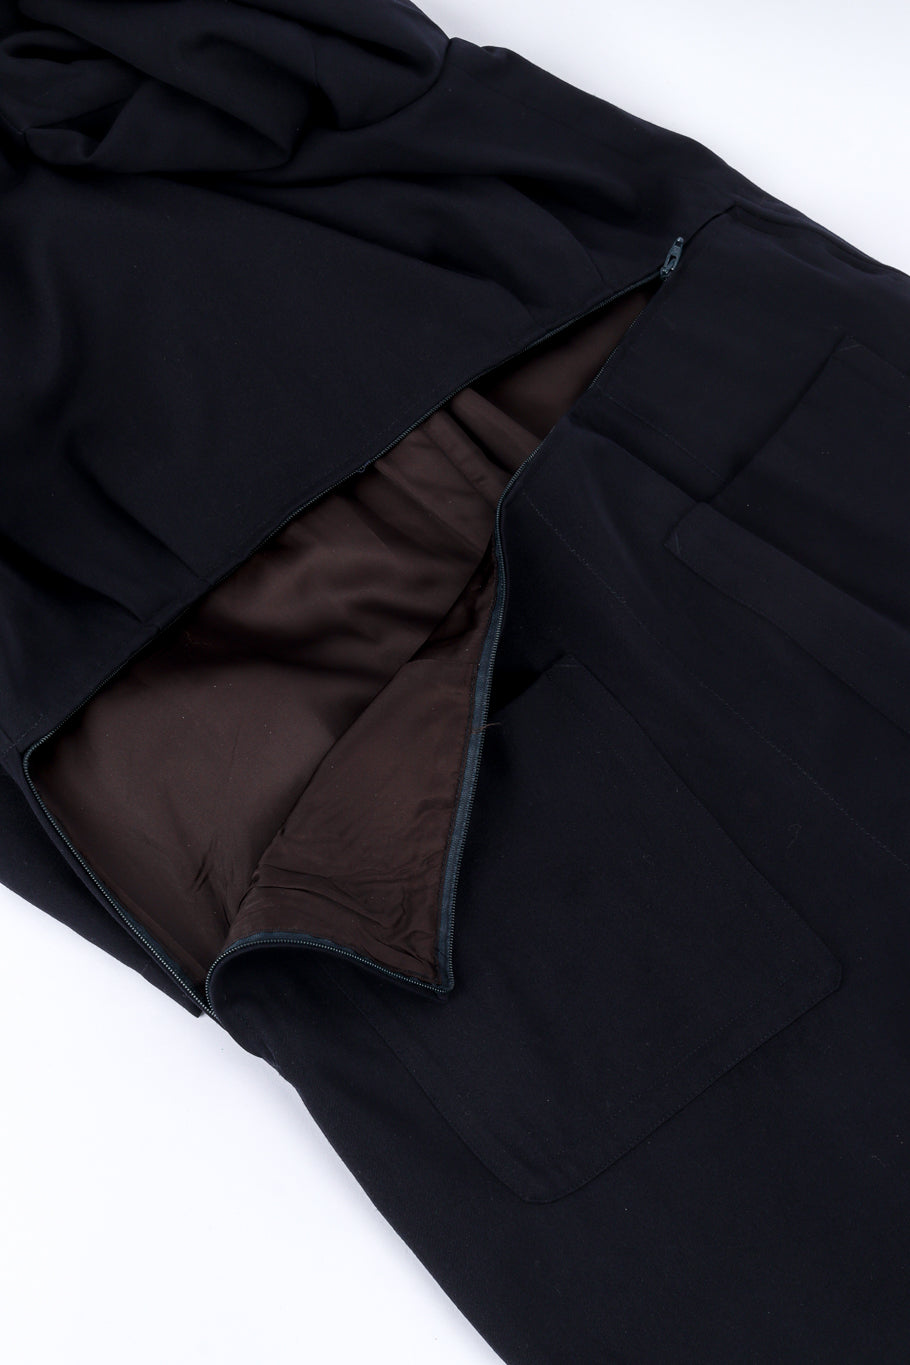 Jean Paul Gaultier Femme Fur Trim Flight Suit back flap unzipped @recessla